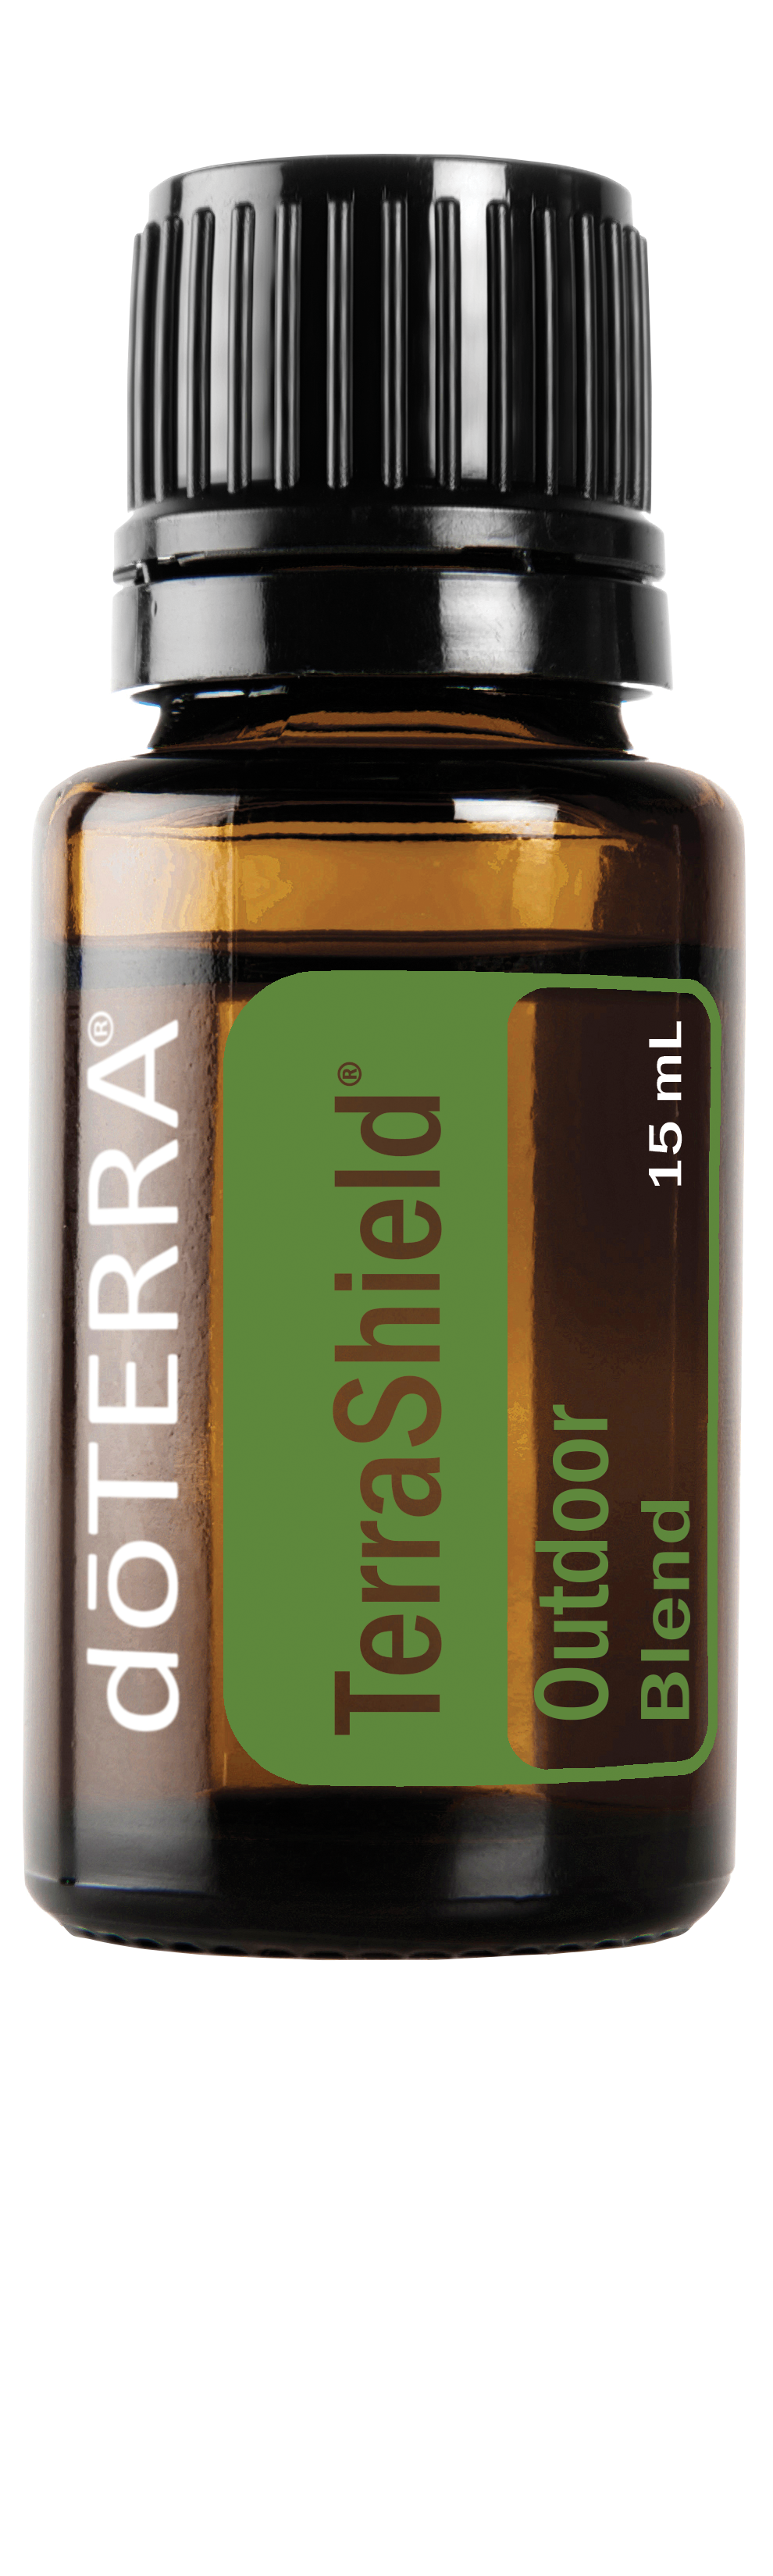 TerraShield essential oil